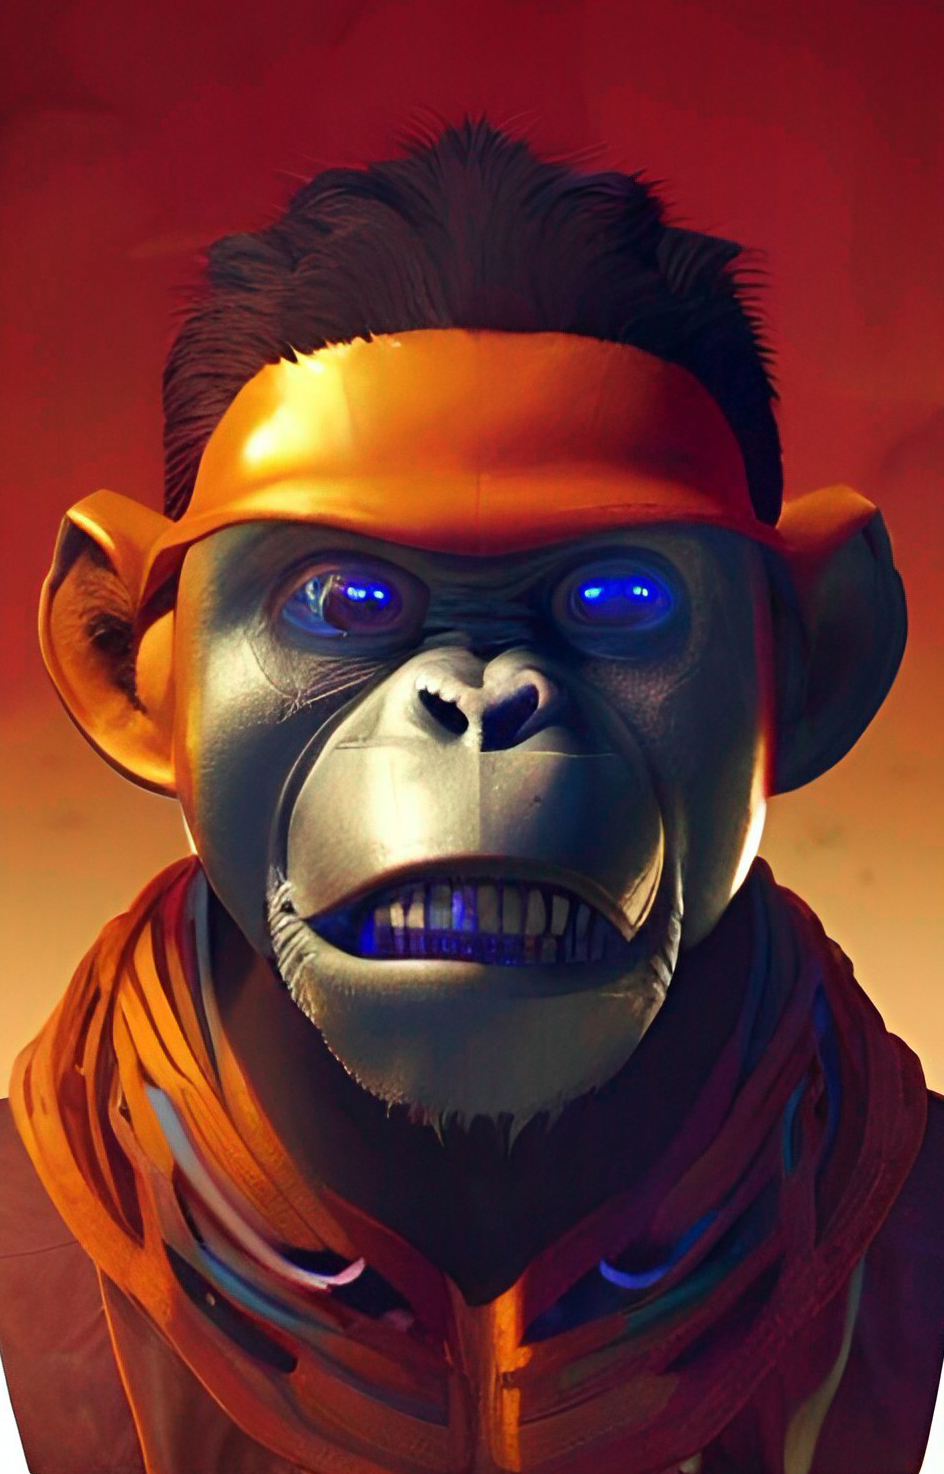 Cyberpunk Monkey